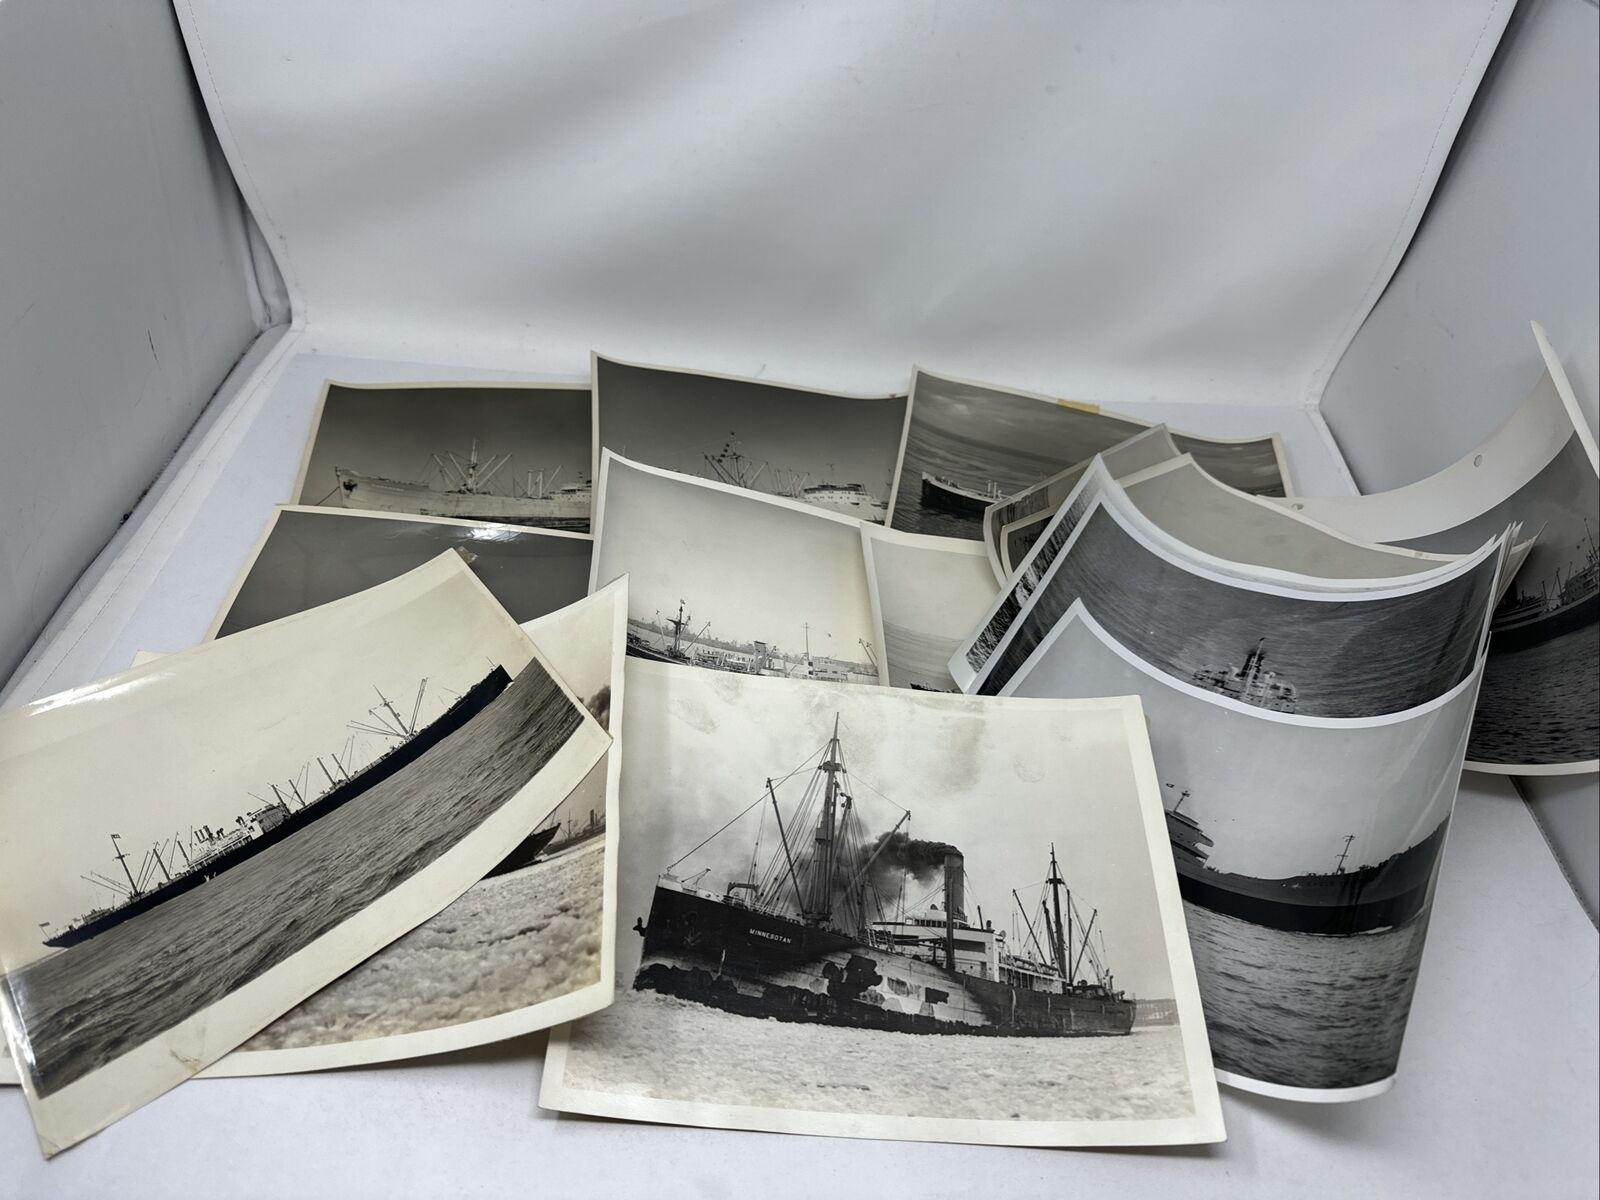 Lot of 18 Vintage Steamship Cargo Ships Photos 8x10 B&W Black & White